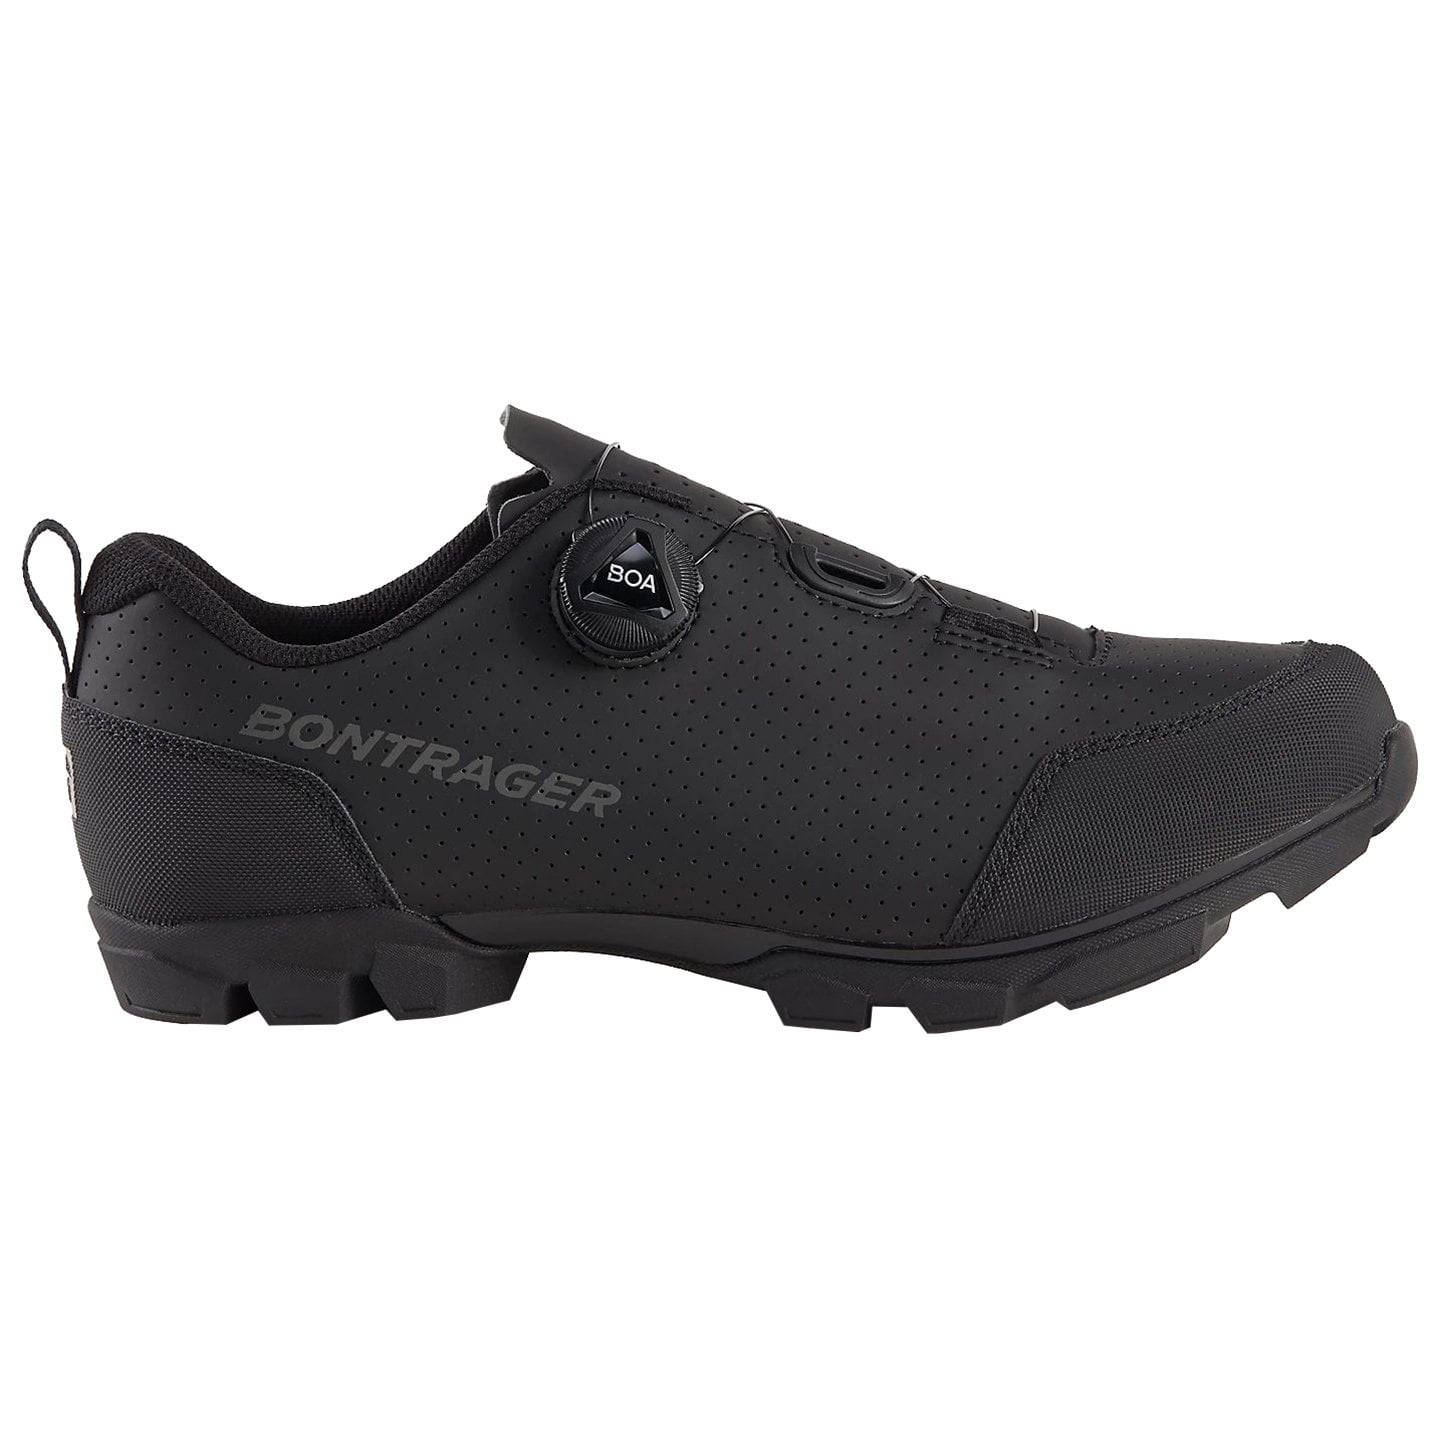 BONTRAGER Evoke 2023 MTB Shoes MTB Shoes, for men, size 41, Cycling shoes